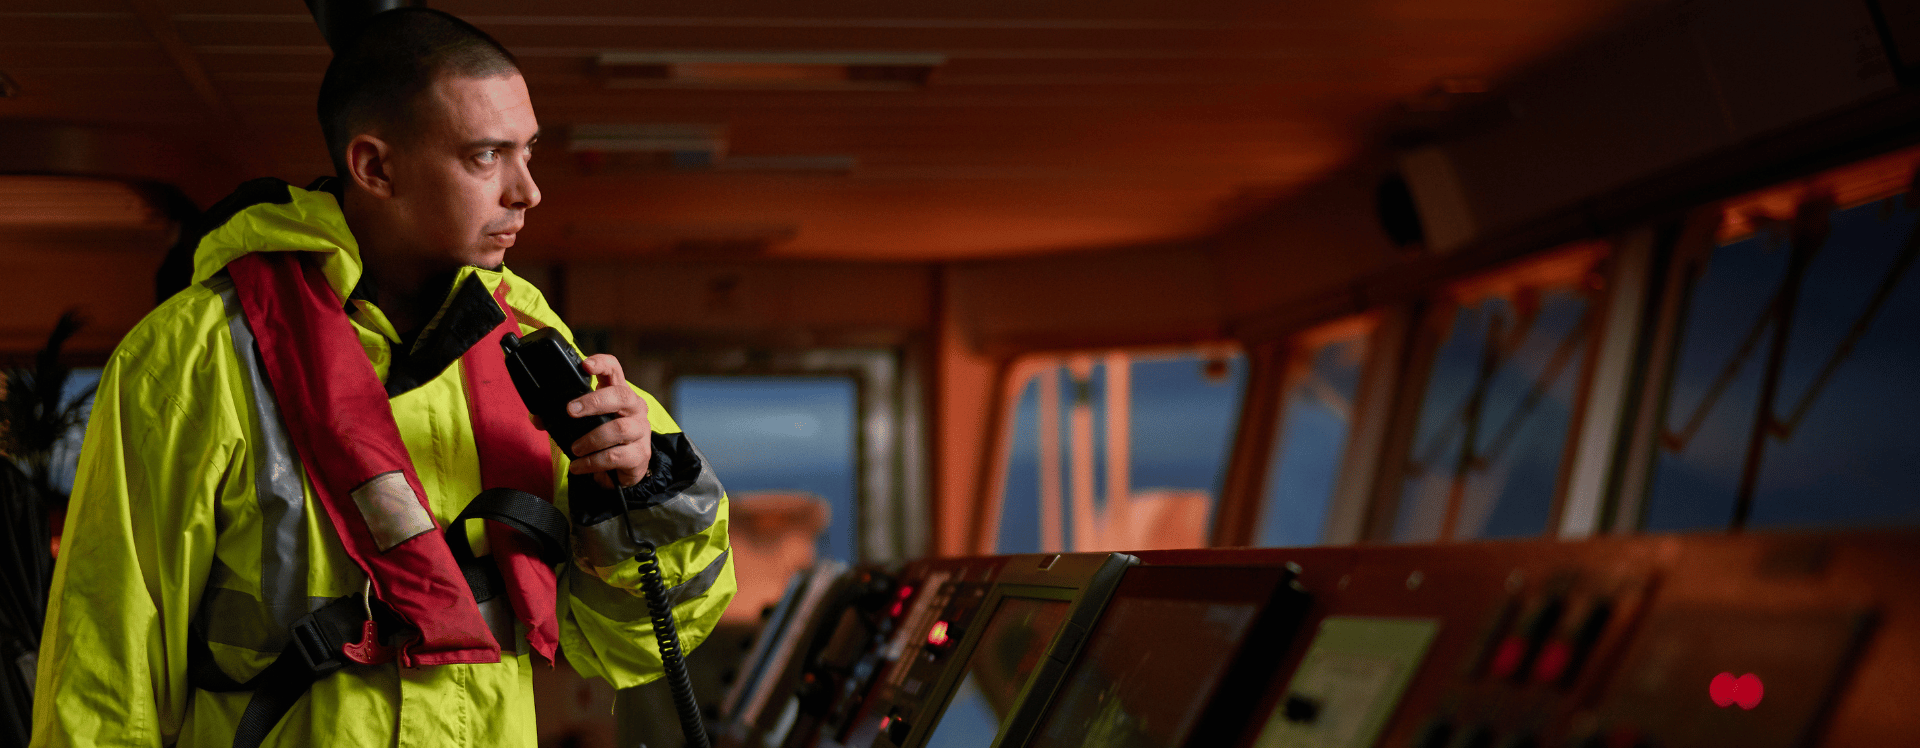 Enabling remote AR mentoring for maritime crews